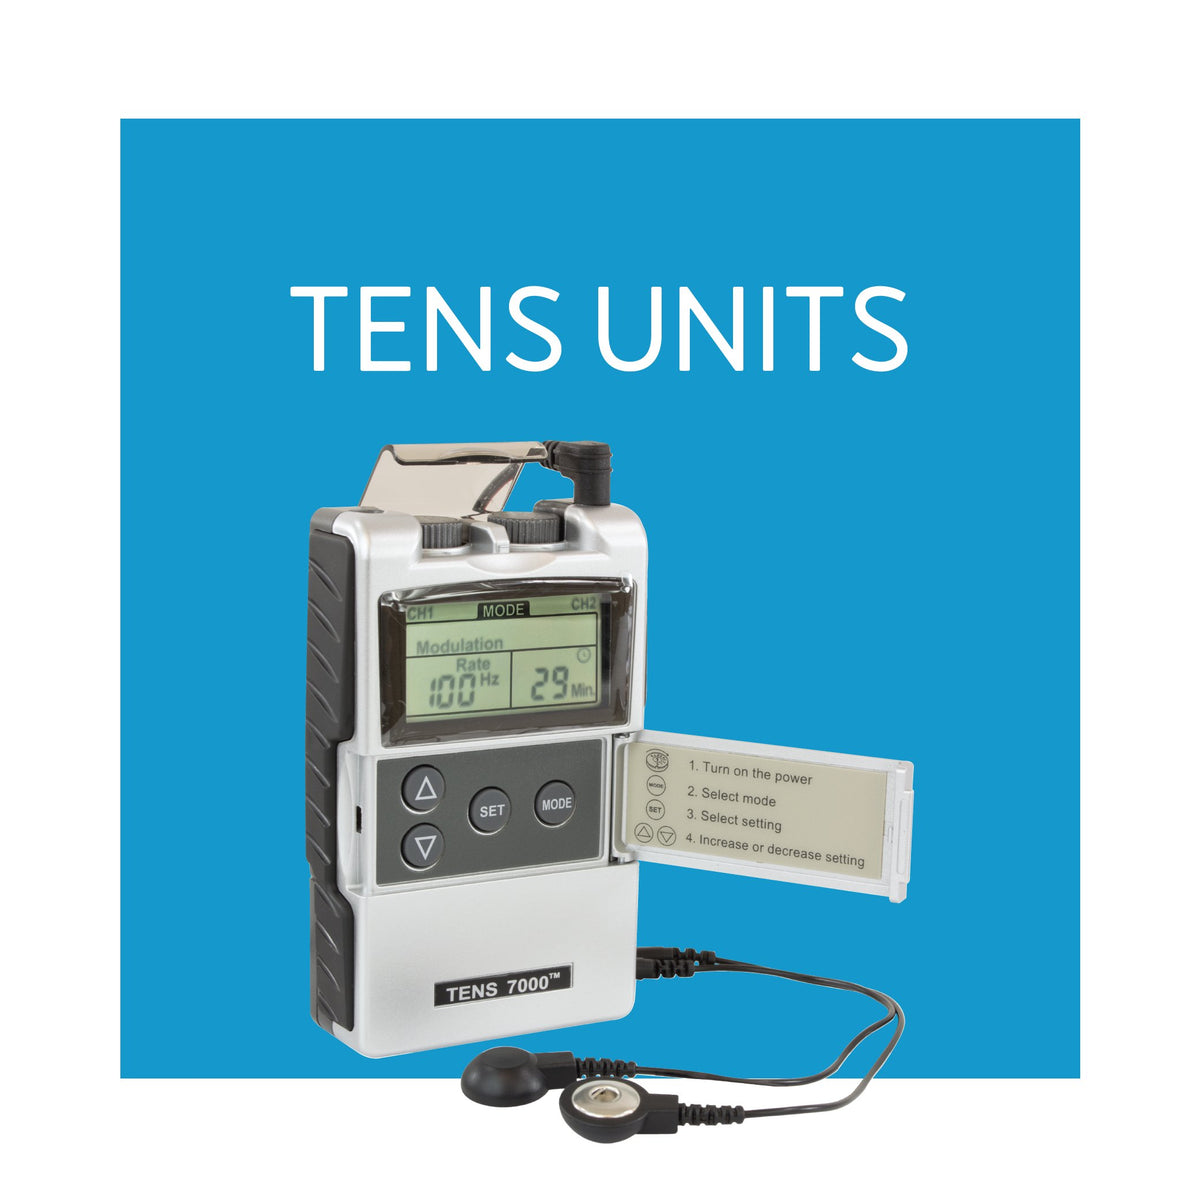 Tens unit model 3000, EMS Muscle Stimulator - OTC TENS Machine for Pain  Relief